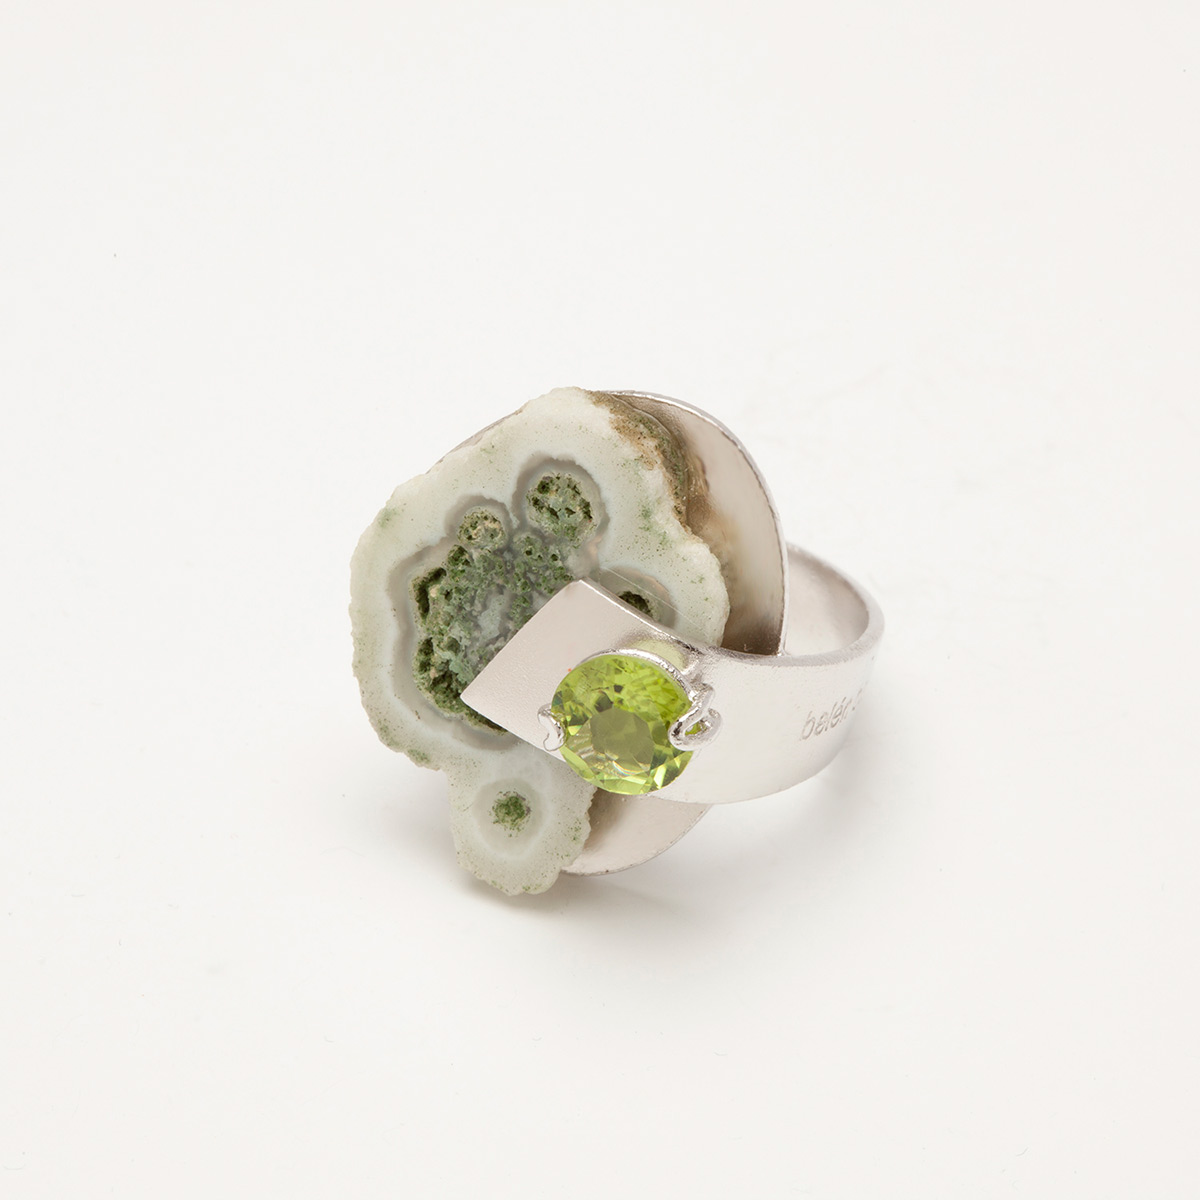 Yui handmade ring in sterling silver, solar quartz and 2 zirconia designed by Belen Bajo